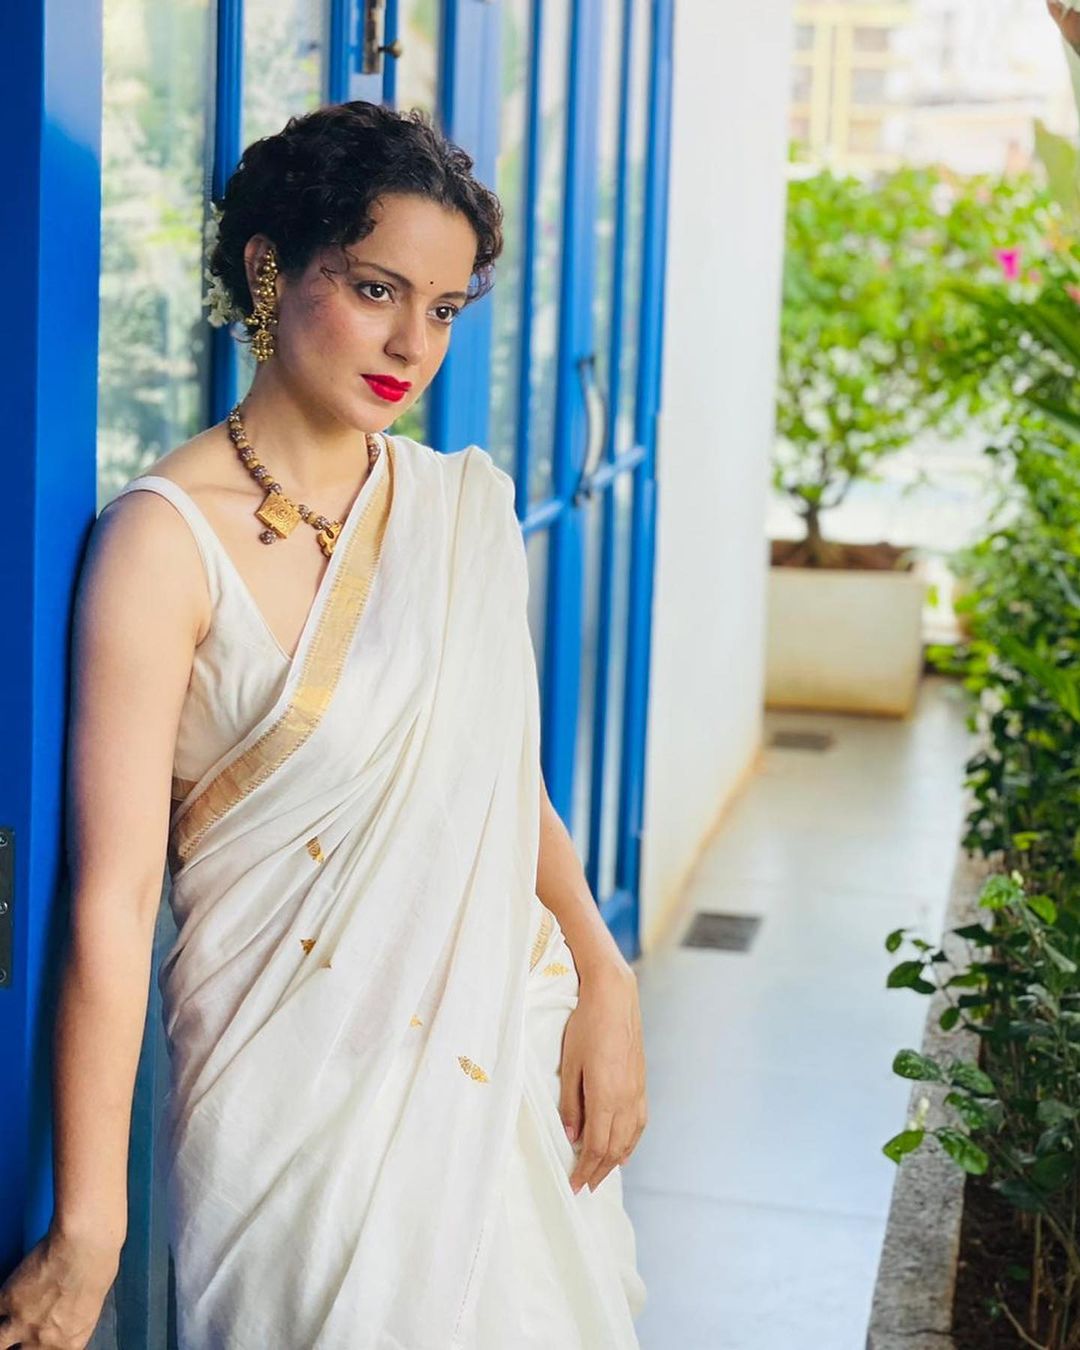 Kangana Ranaut looks gorgeous in the white saree with golden border.